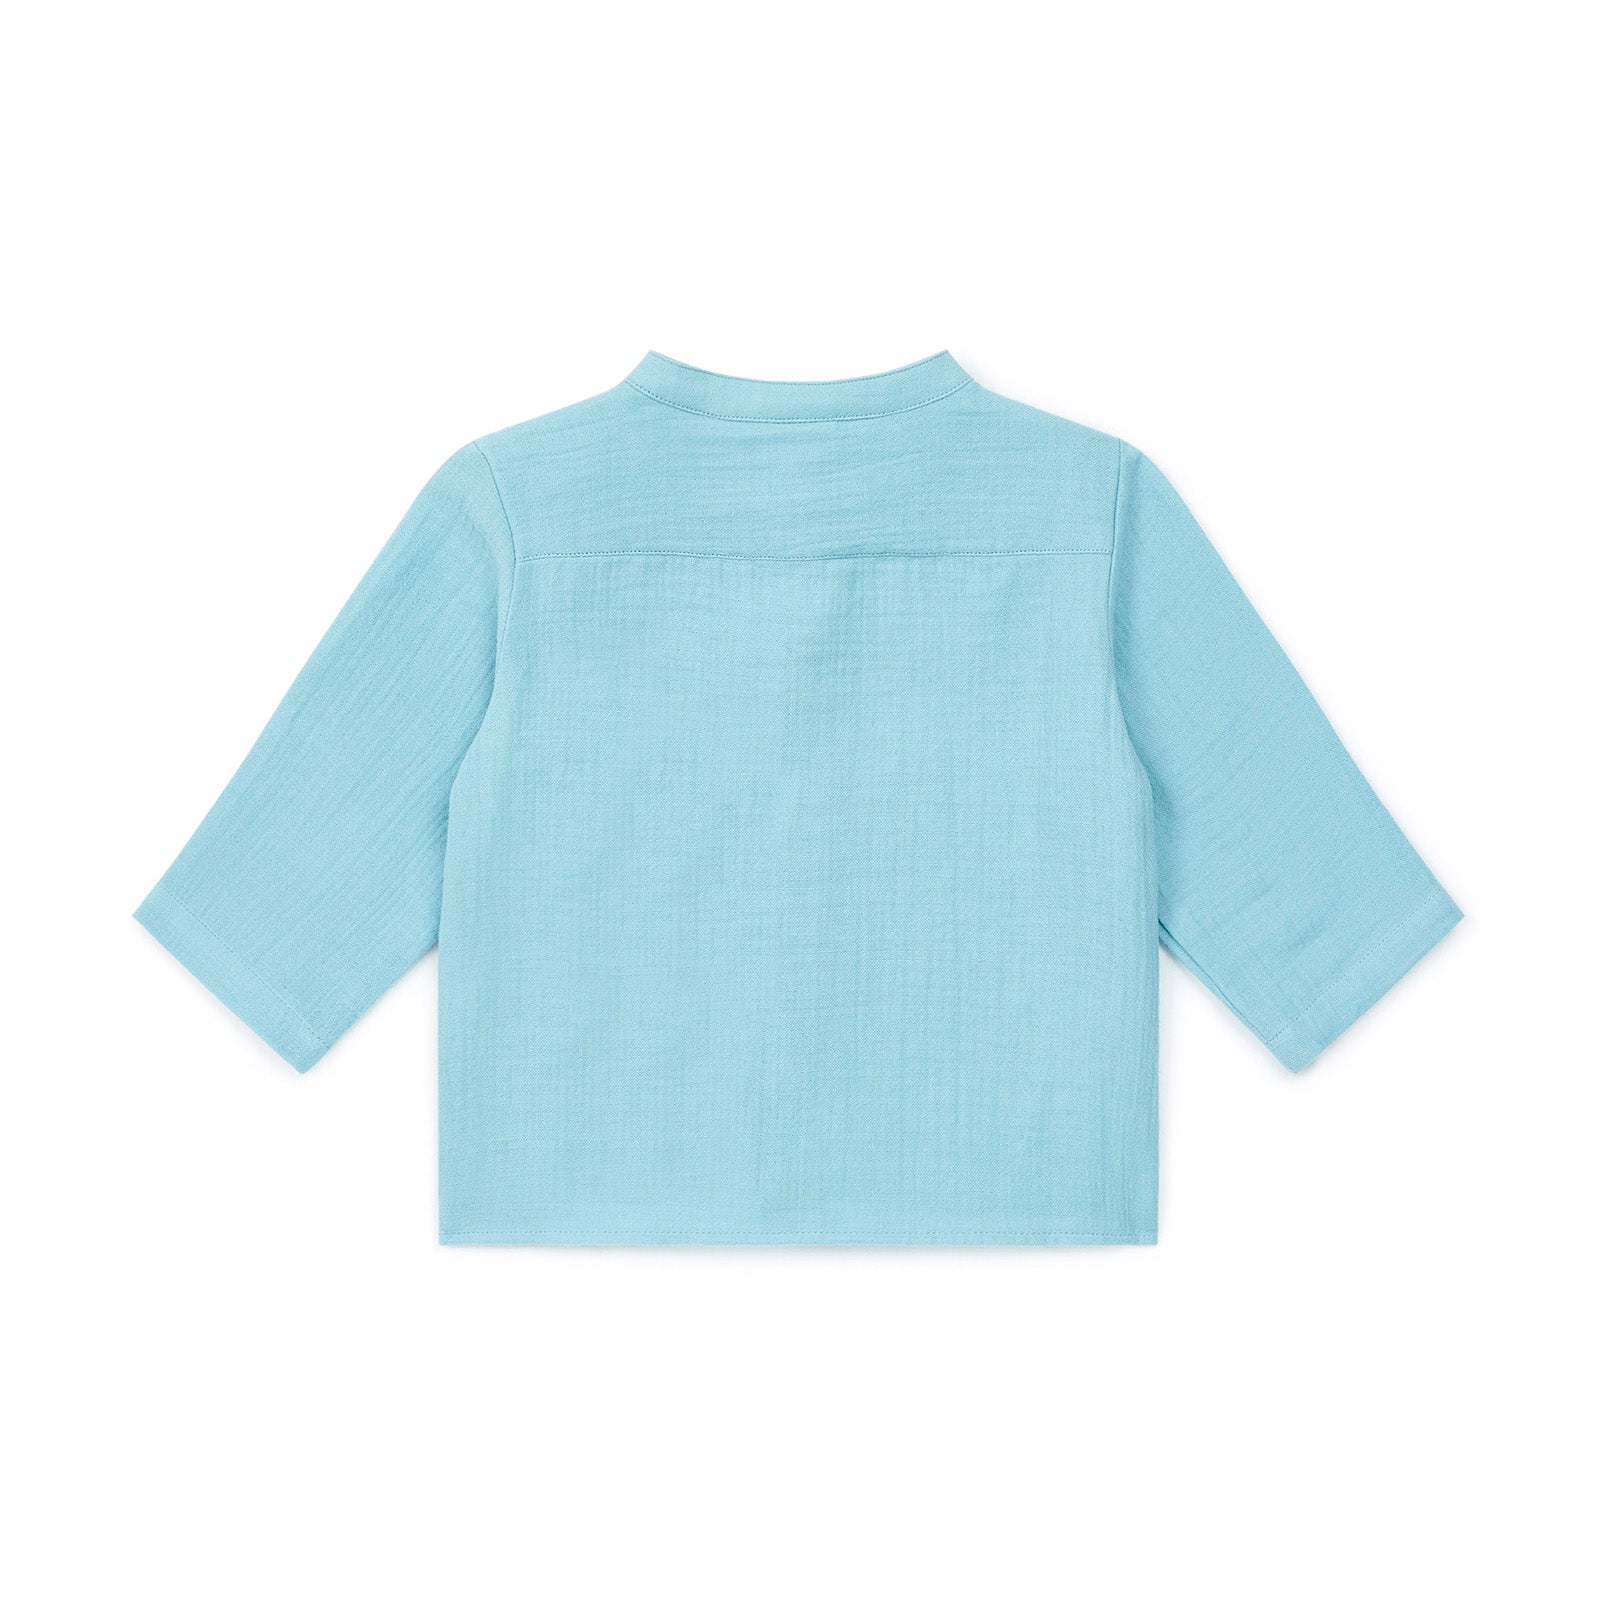 Baby Boys Blue Cotton Shirt